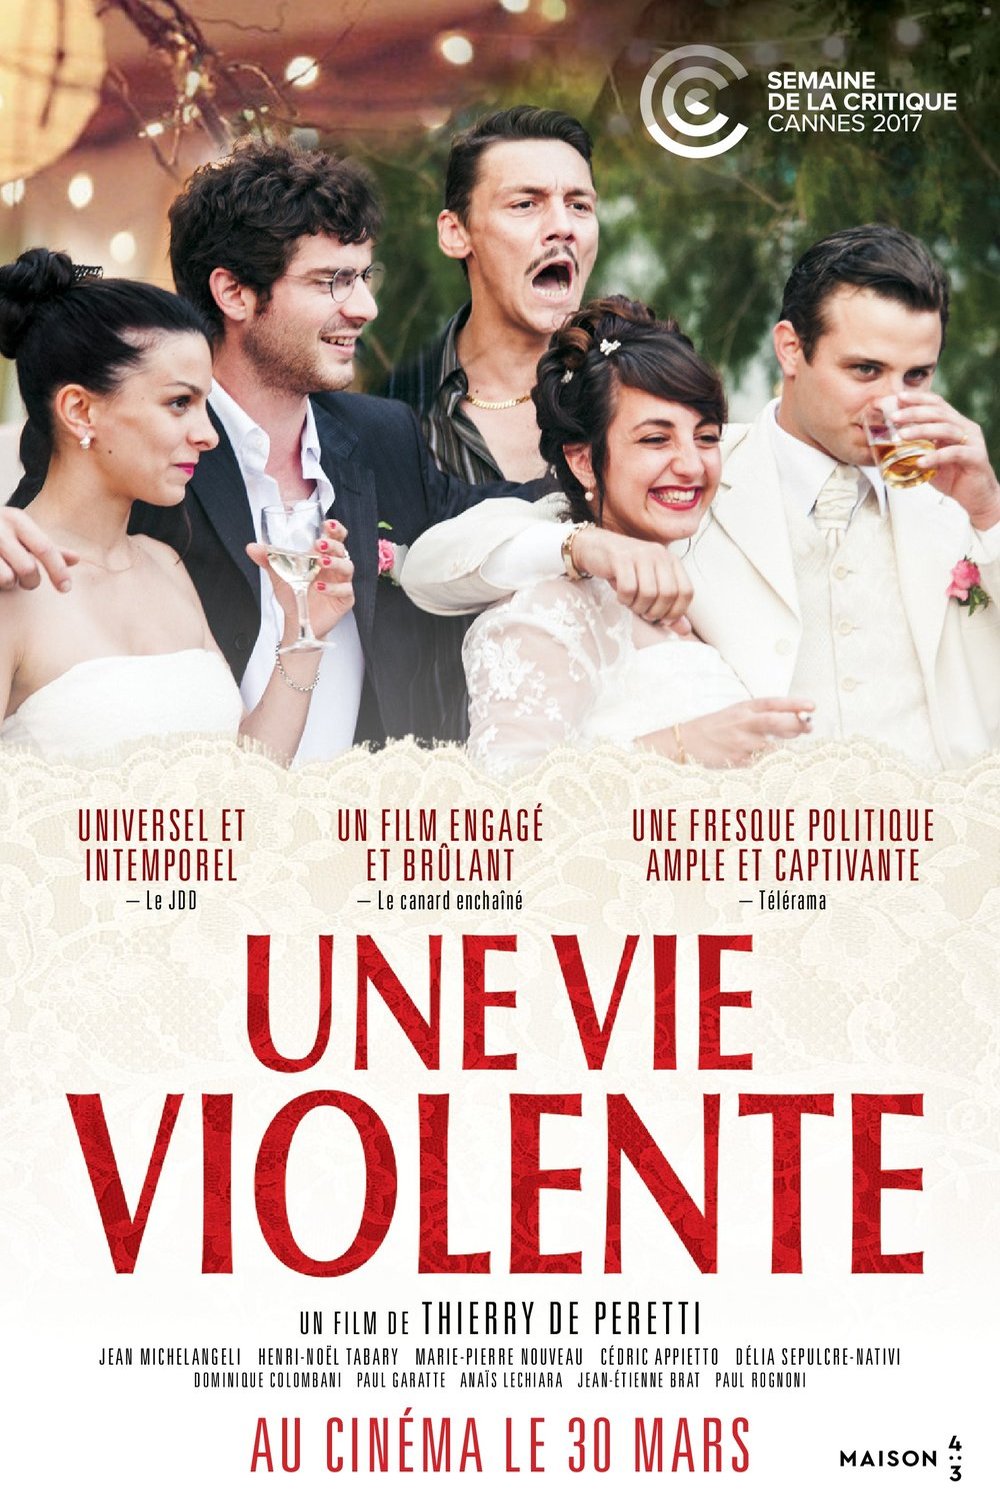 Poster of the movie Une vie violente